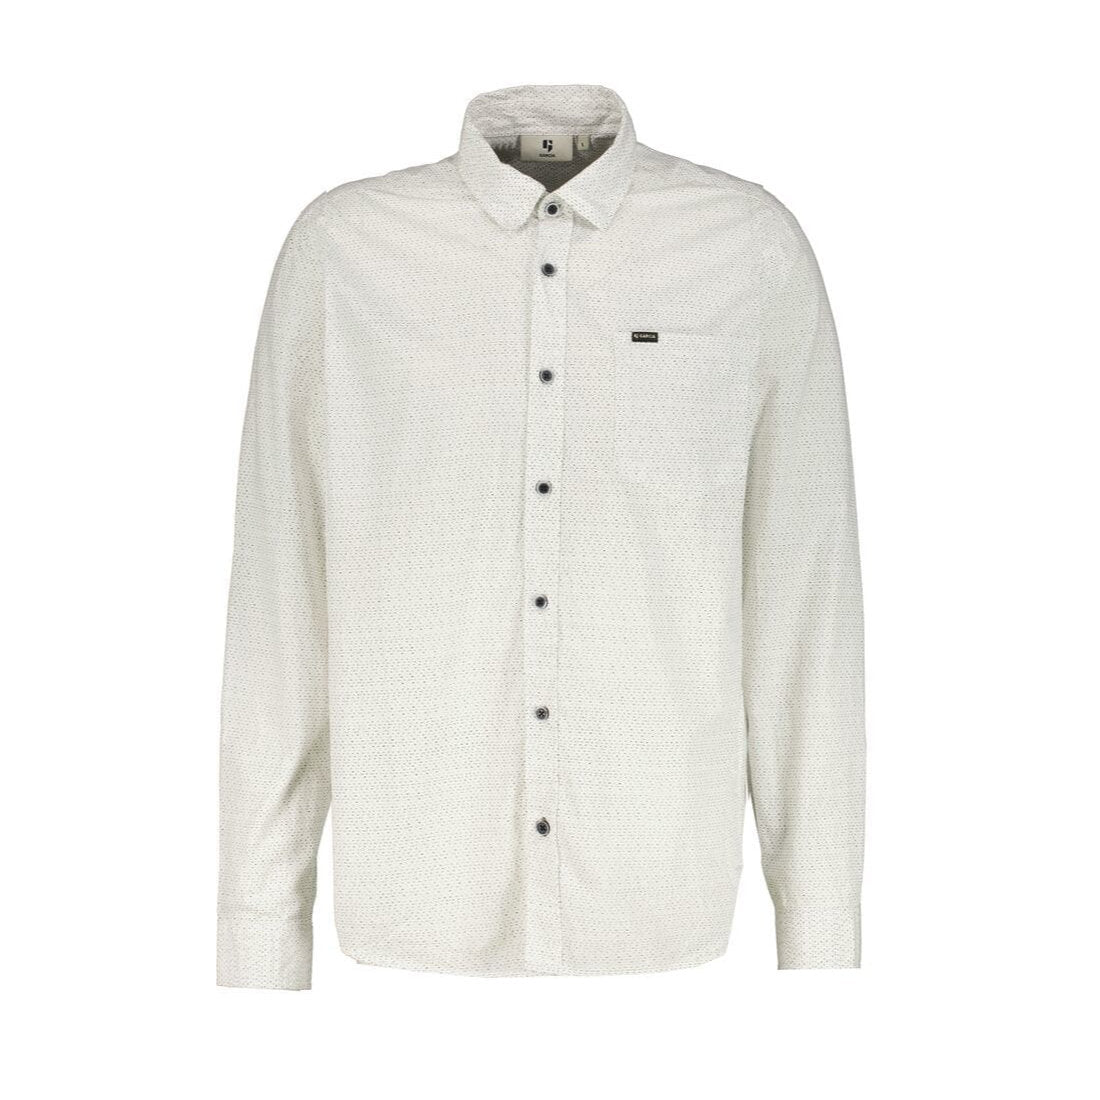 Garcia T21082 Cotton Dress Shirt - White - 5 - Tops - Shirts (Long Sleeve)